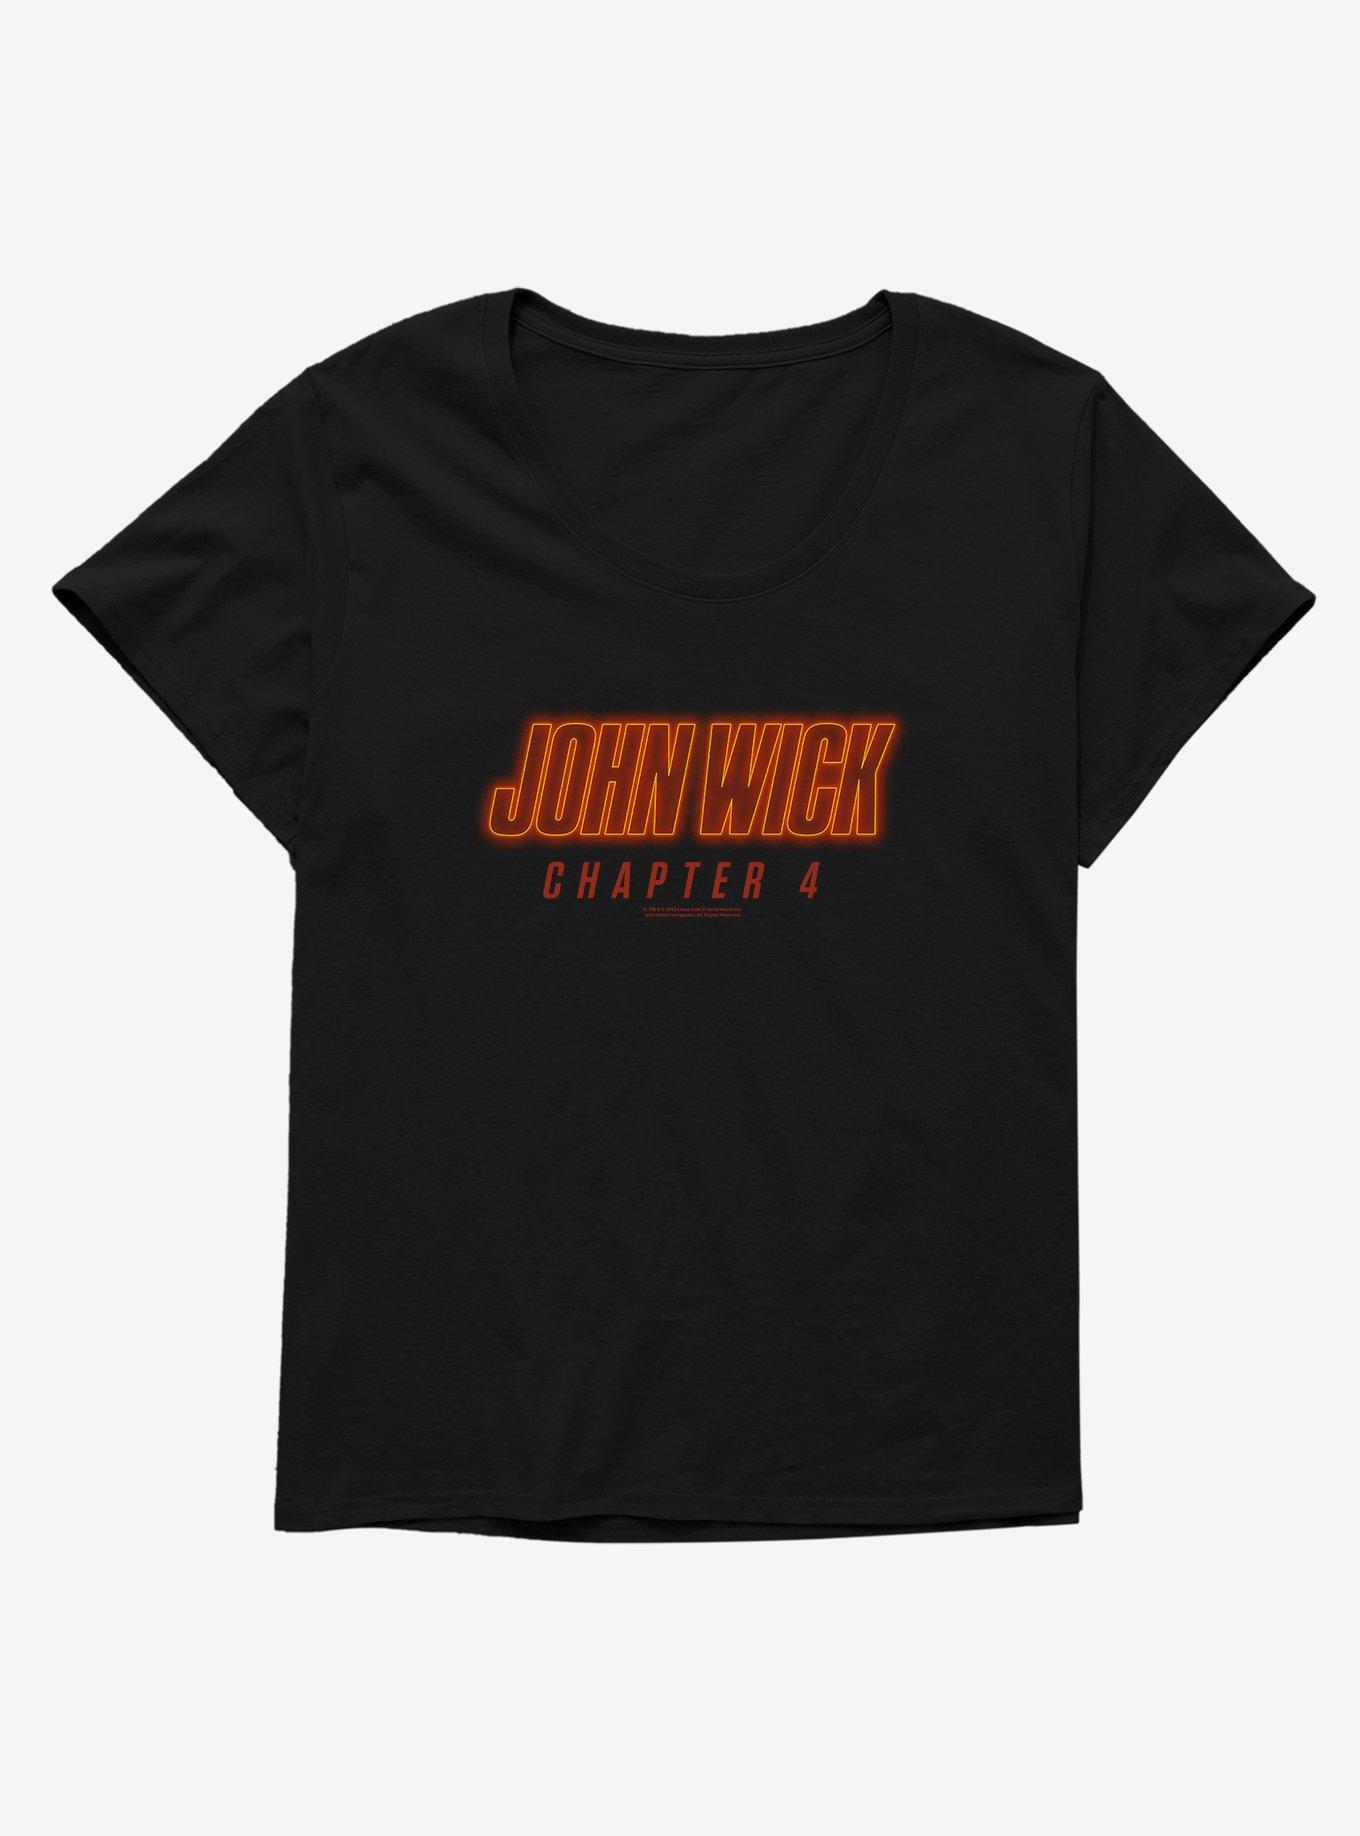 John Wick: Chapter 4 Title Logo Girls T-Shirt Plus